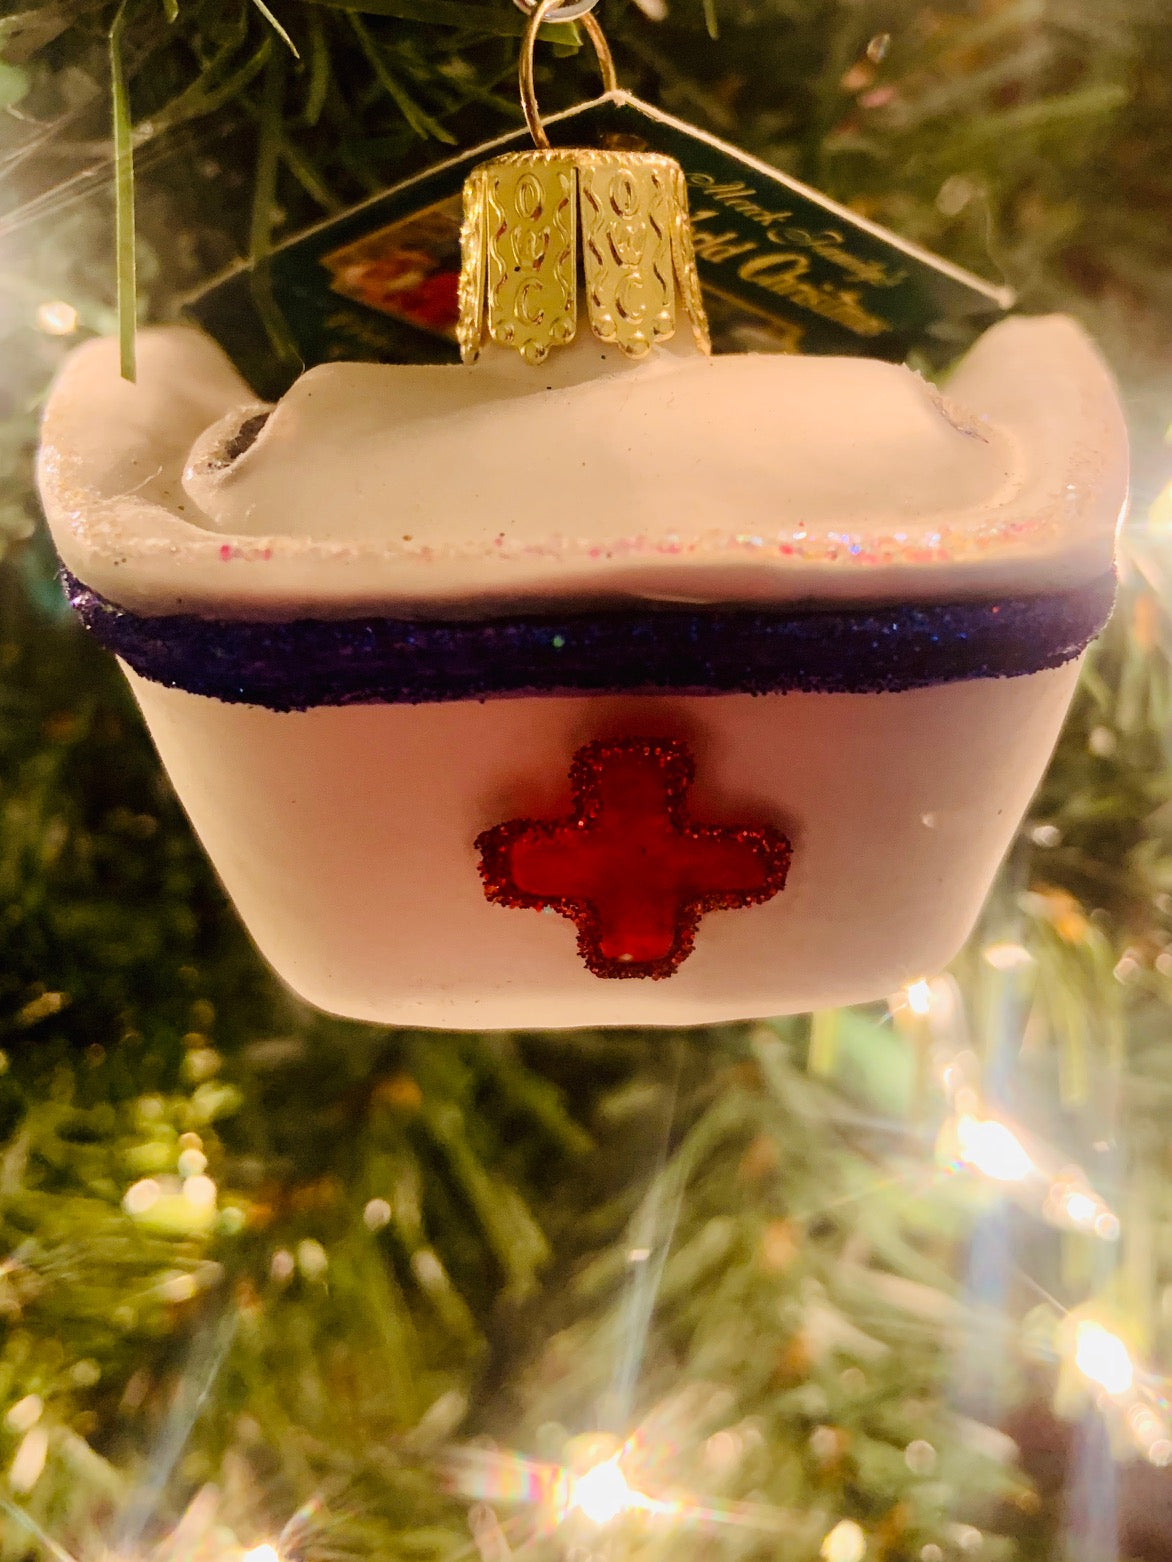 Old World Christmas Nurse's Cap Glass Blown Ornament